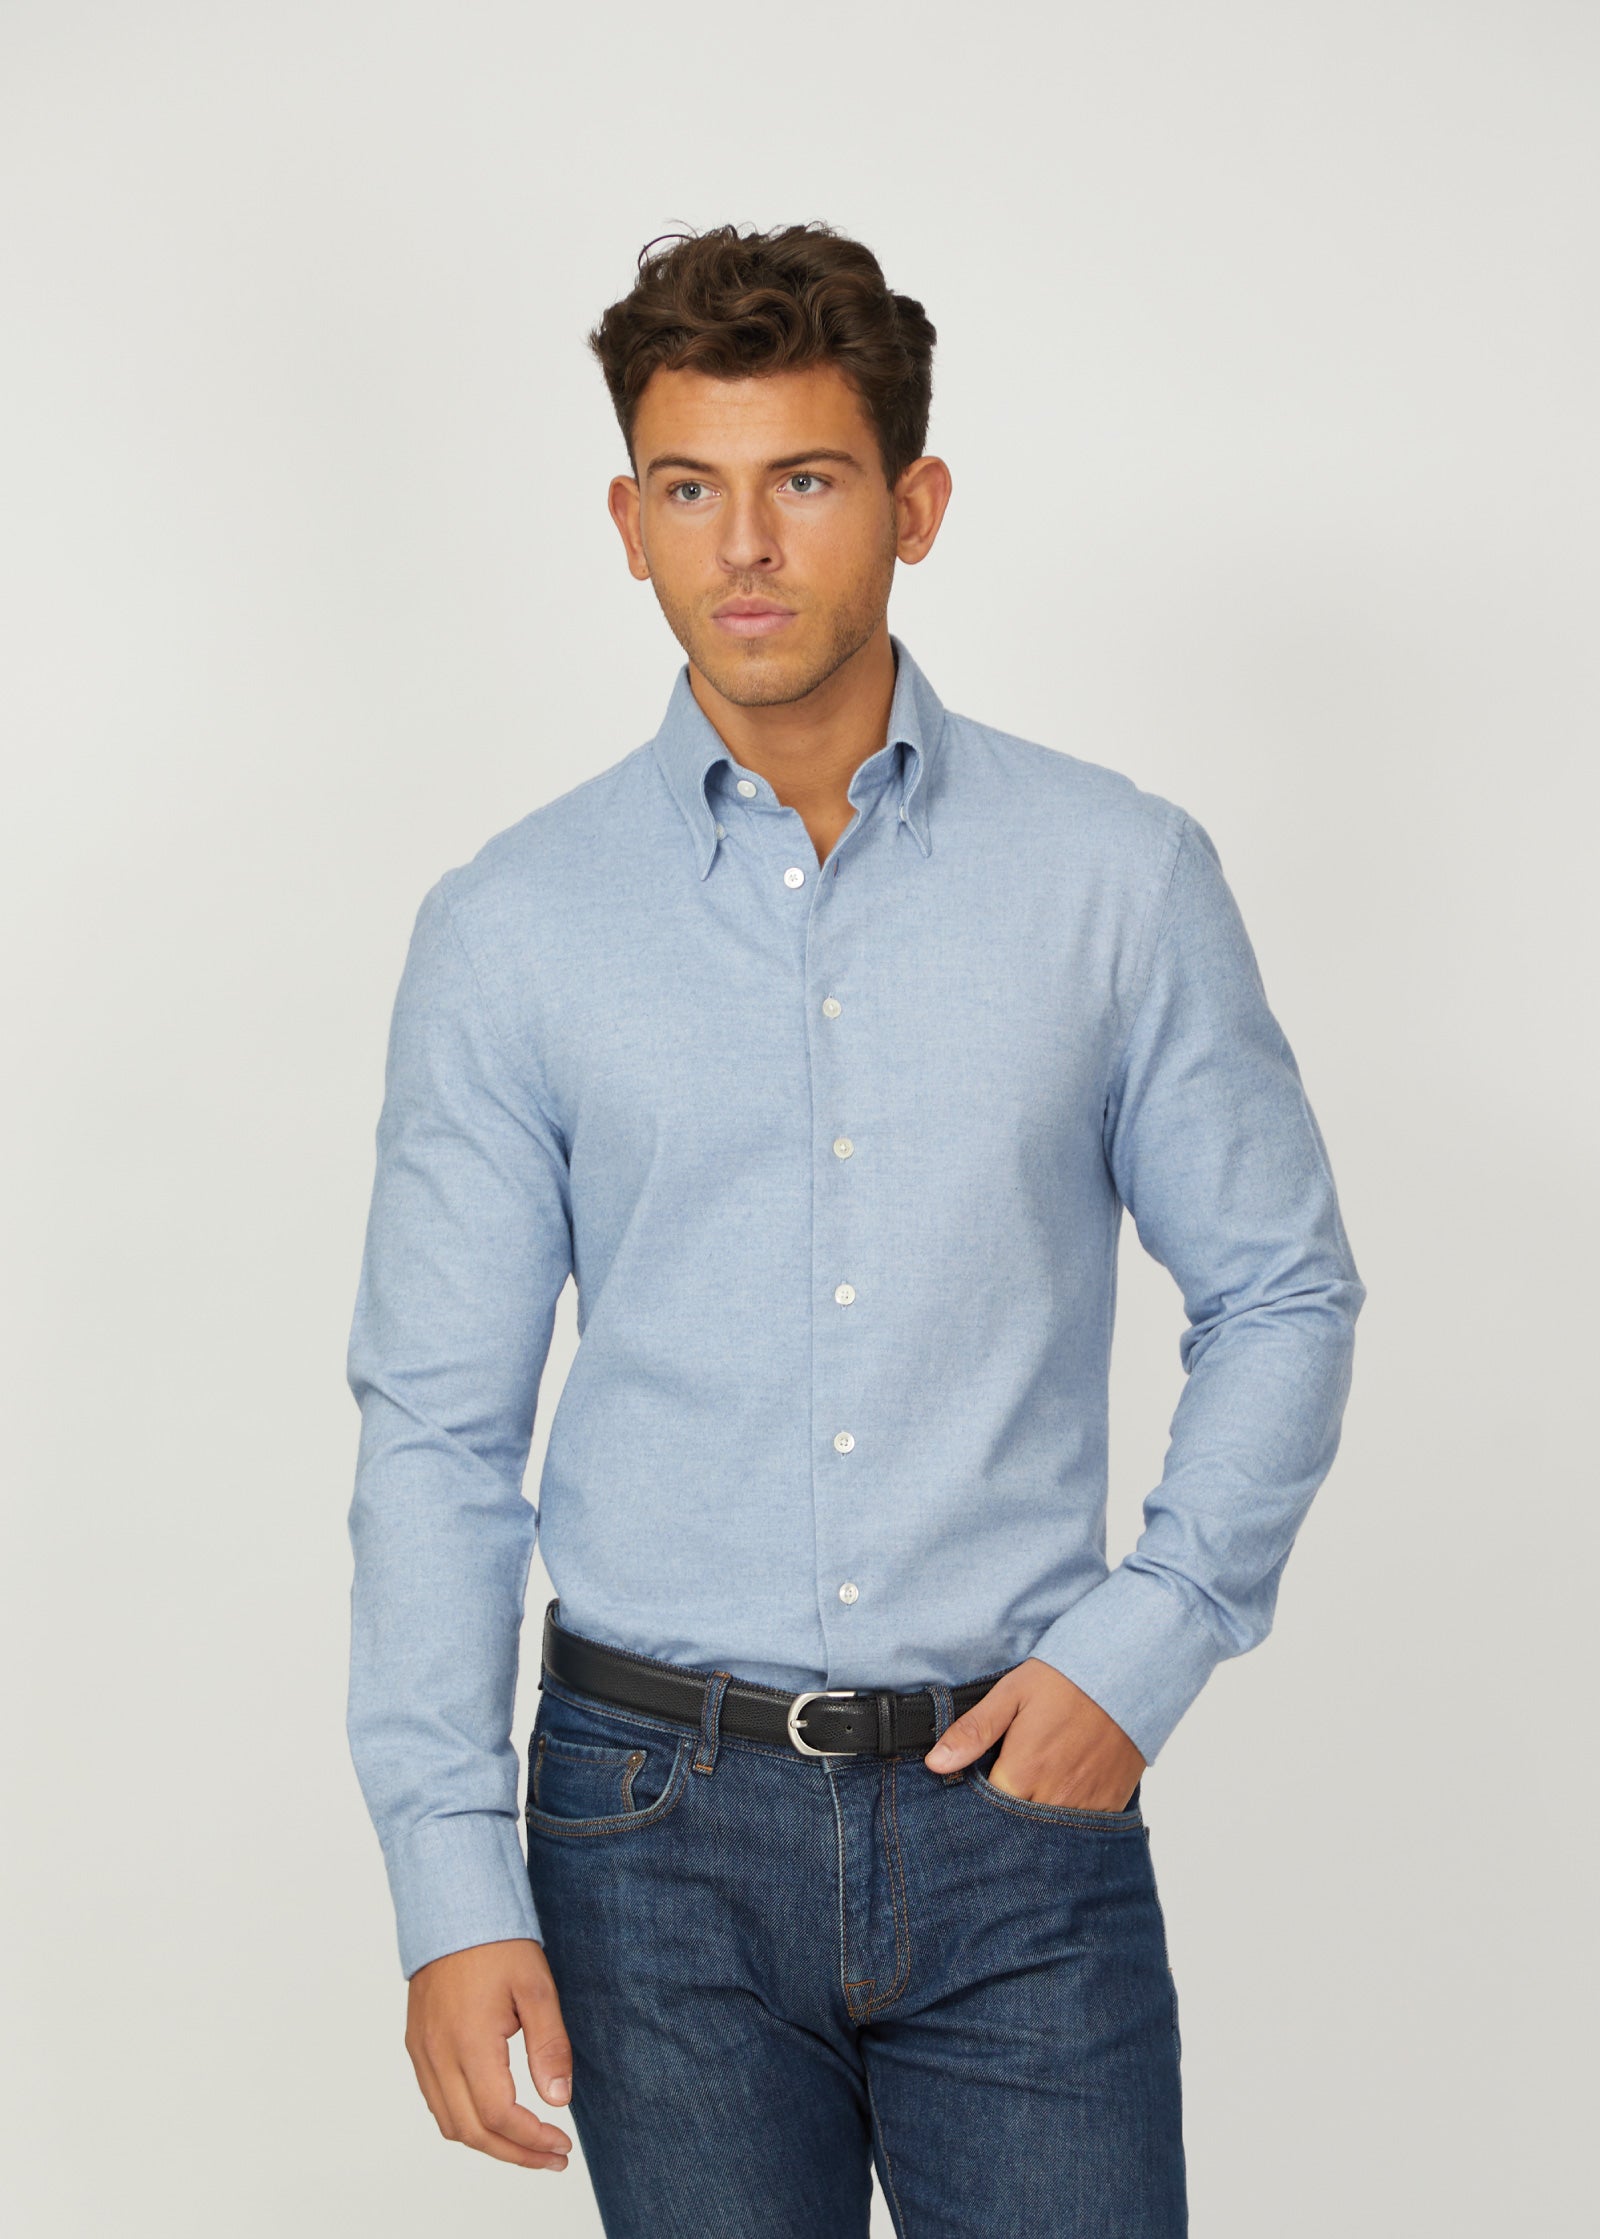 Appearance-Cashmere-Cotton-Shirt-Skjorte-Light-Blue-Lyse-Blaa-Bomuld-Herre-Maend